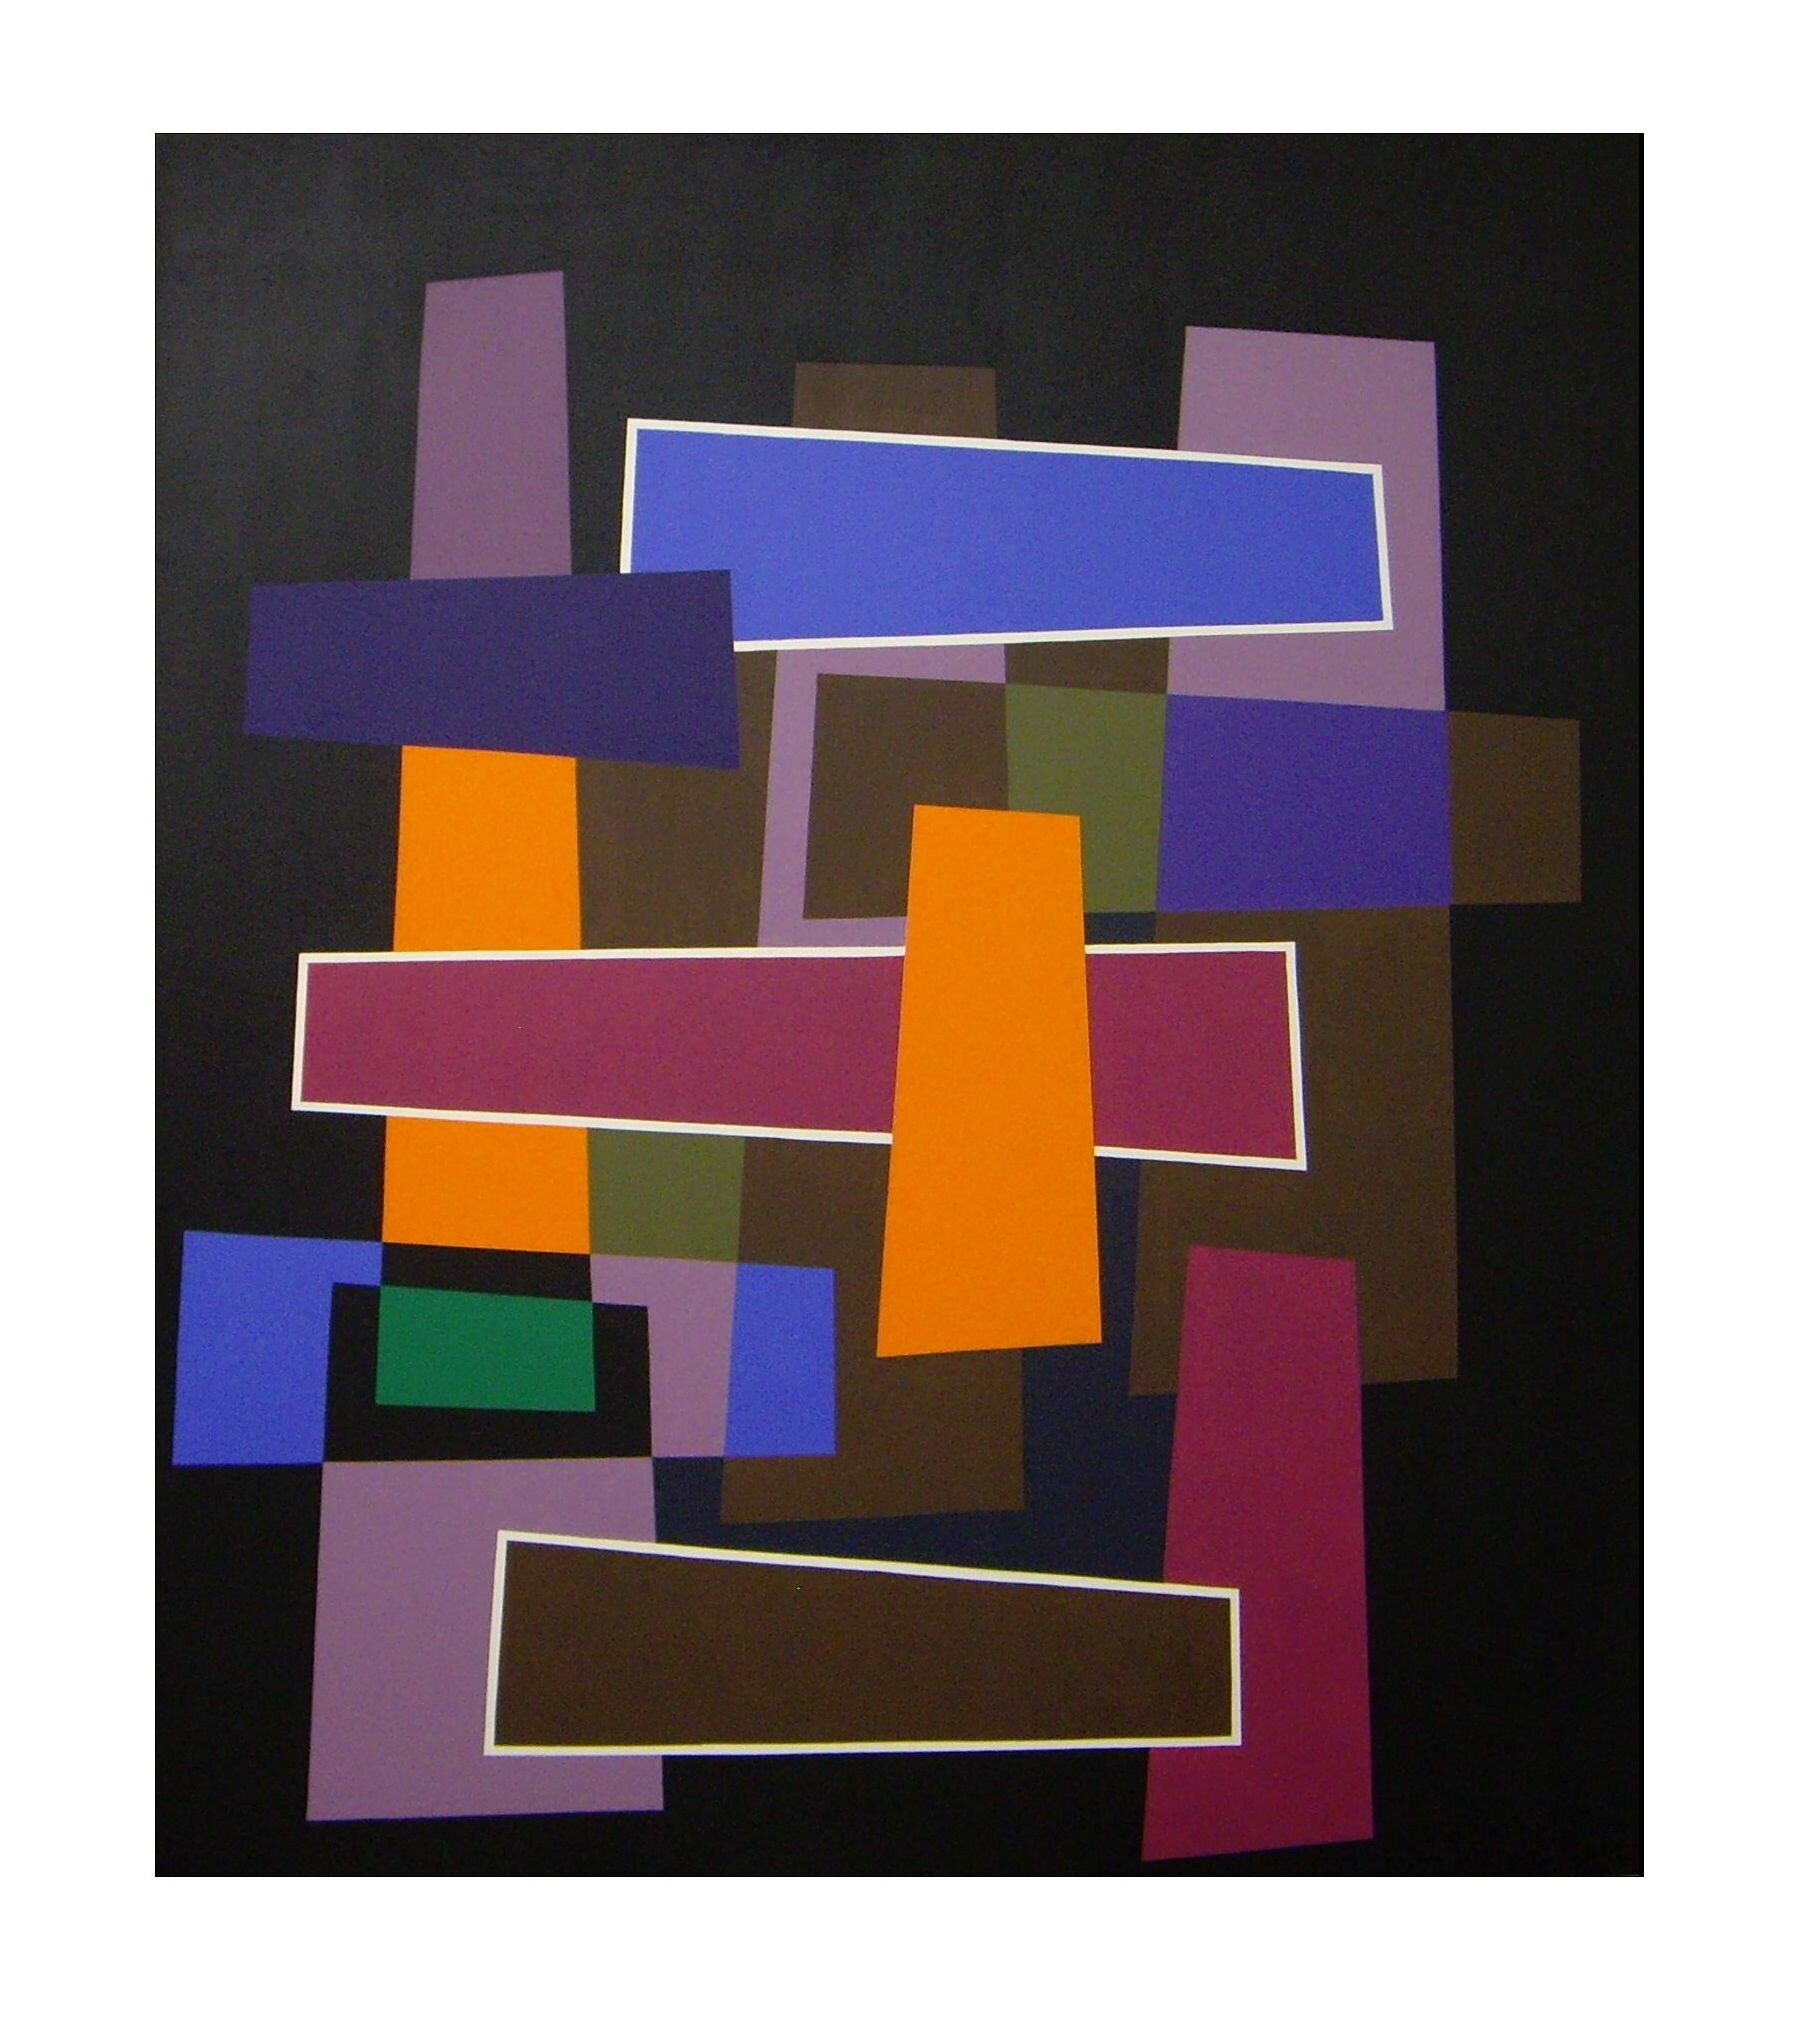 Painting II, 2006